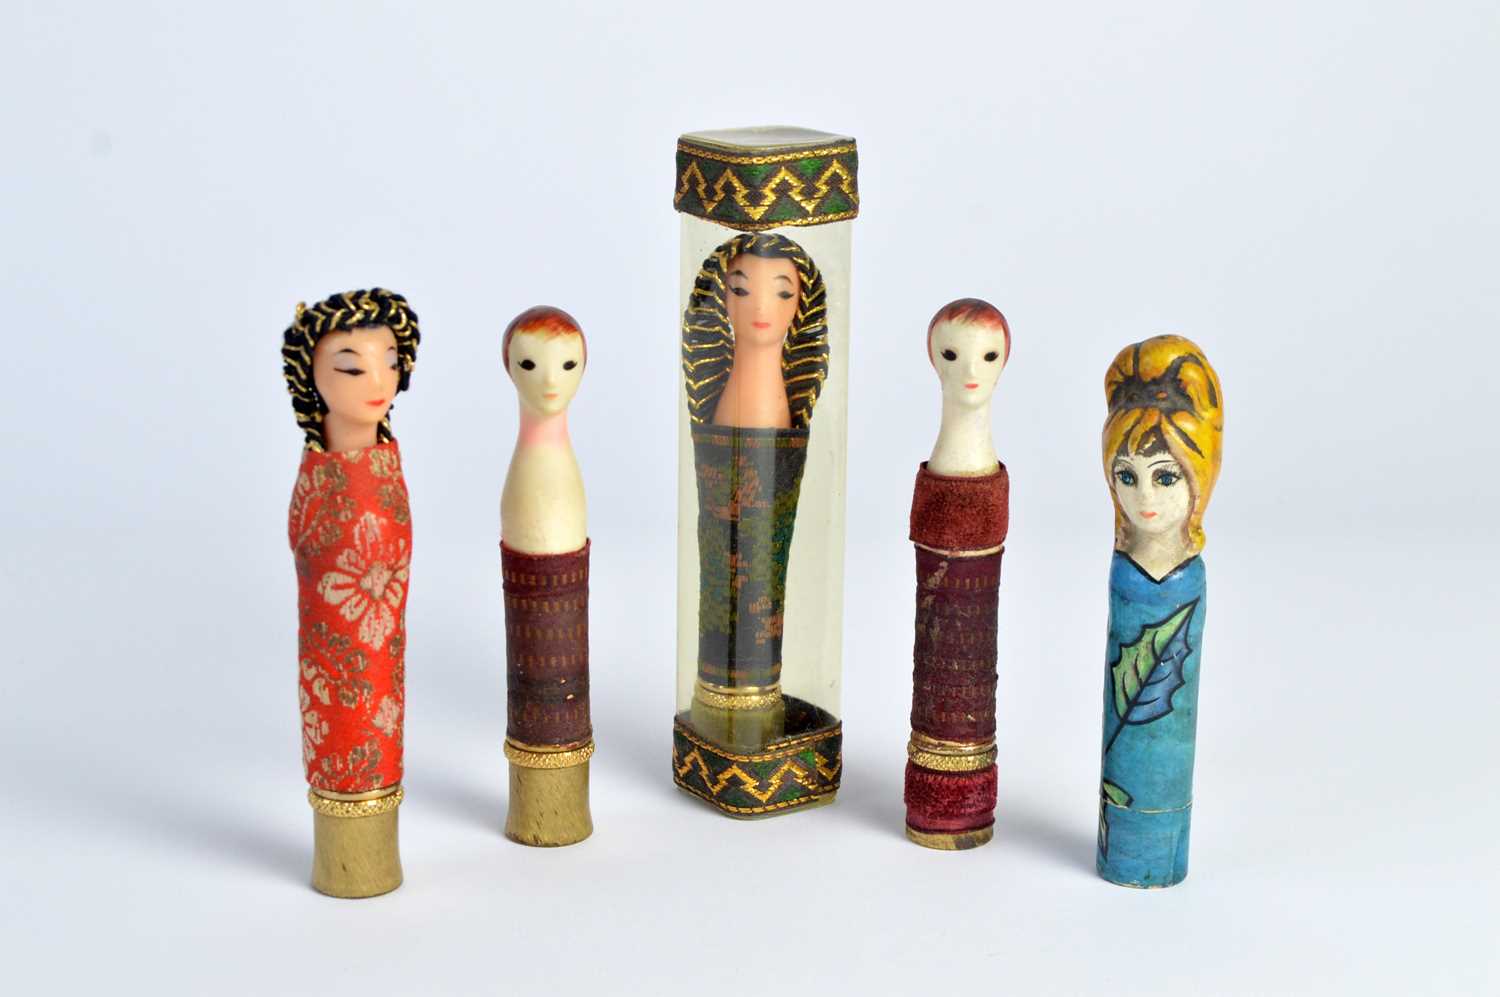 Lot 140 - 1960s Revlon "Couturine" doll lipstick holders